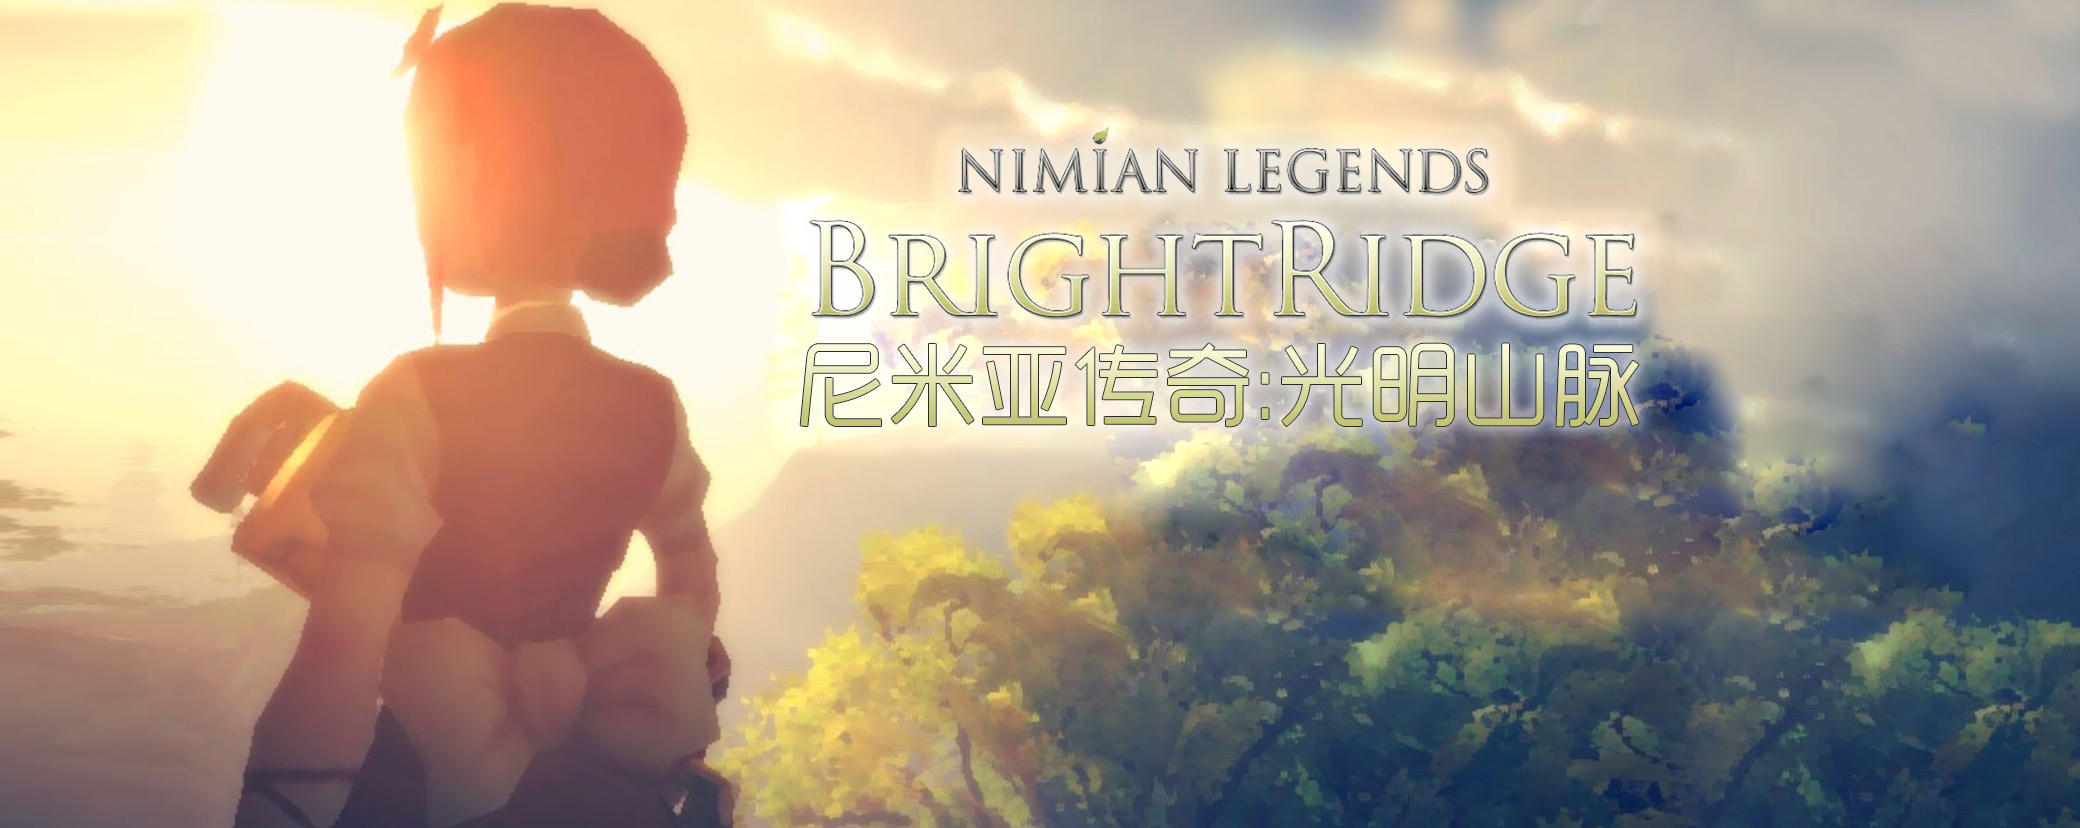 Banner of Leyendas de Nimian: BrightRidge 